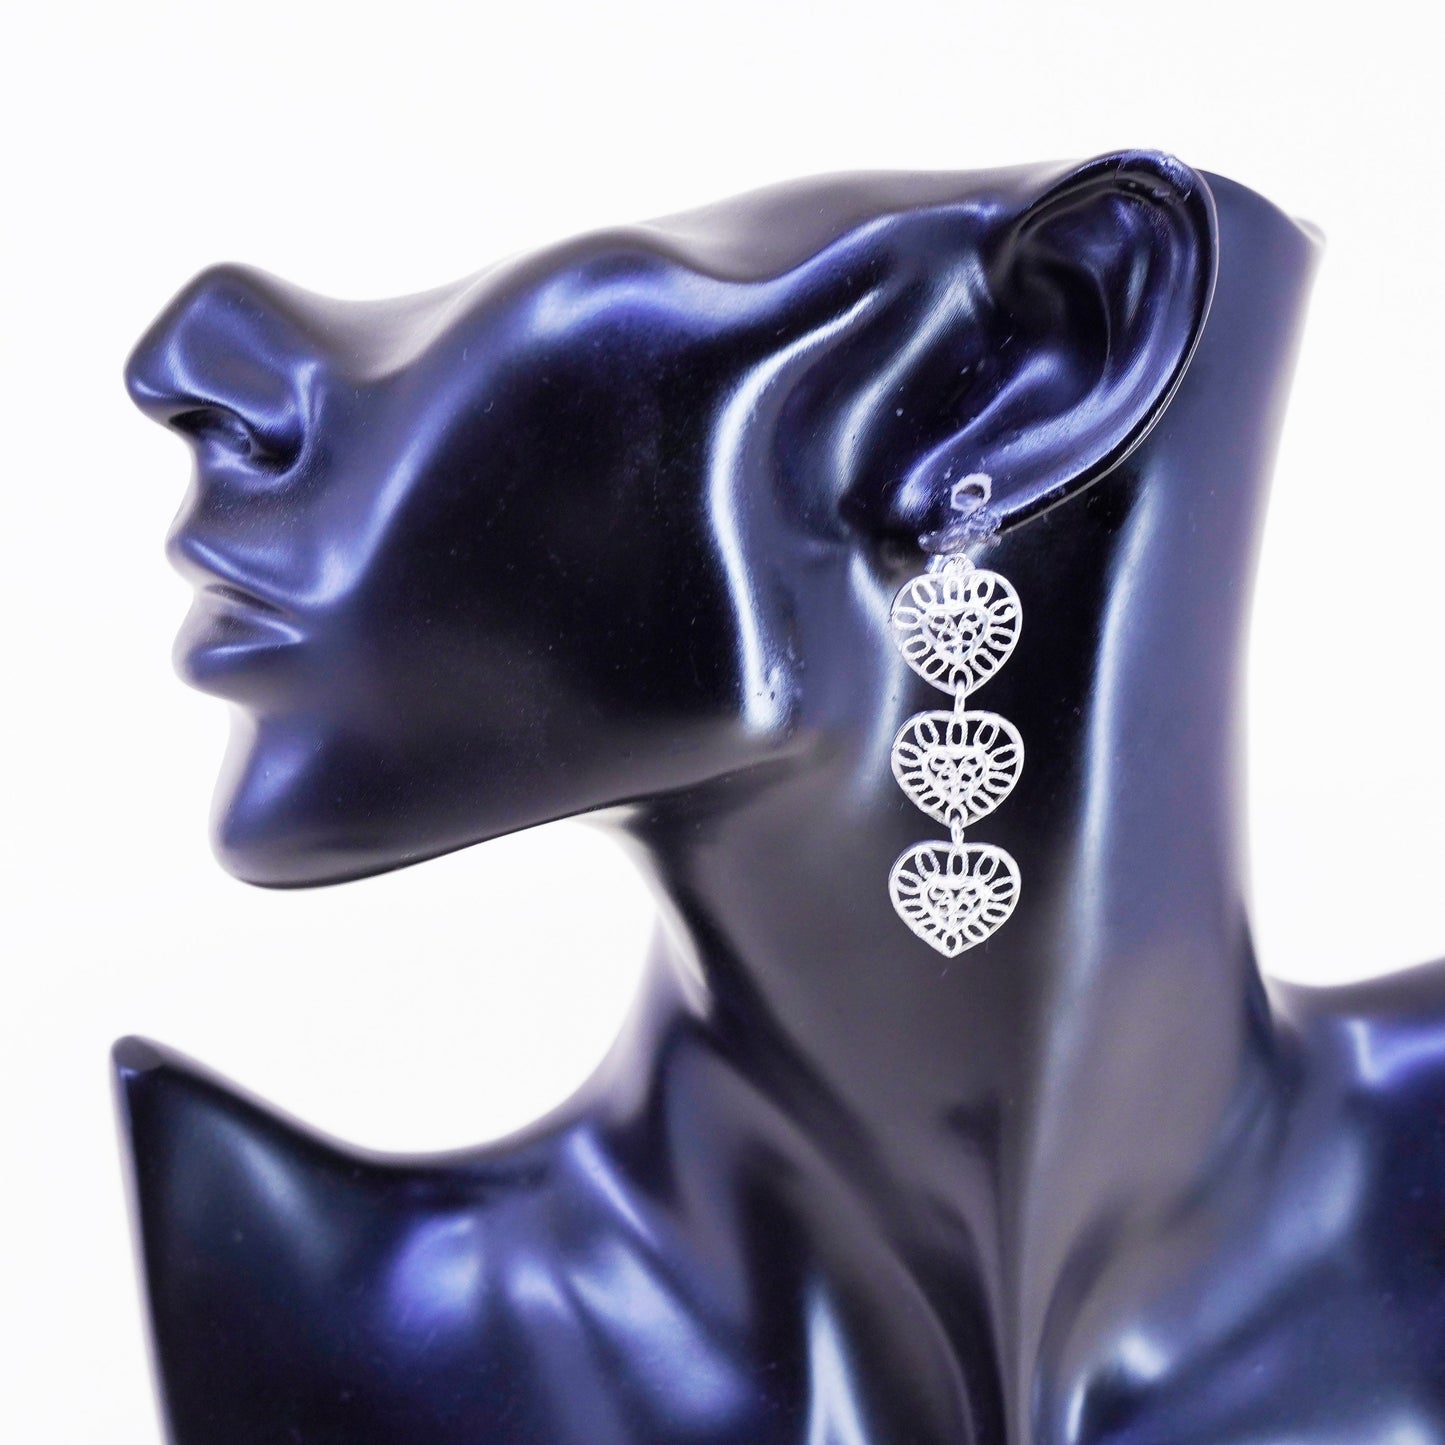 Vintage sterling silver handmade earrings, 925 filigree heart